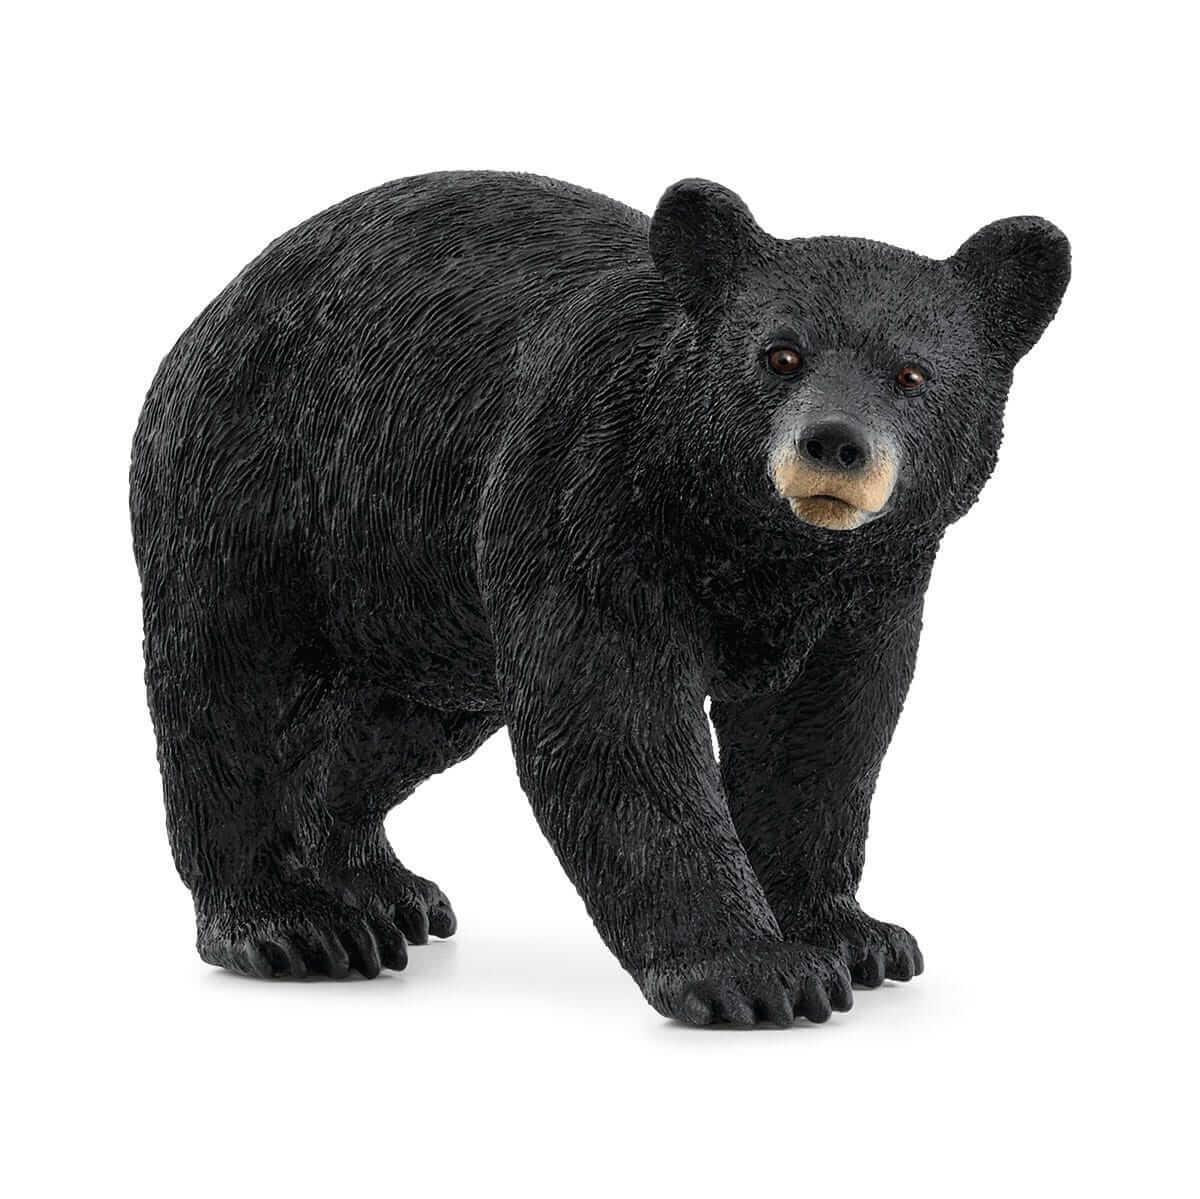 Schleich Wild Life American Black Bear Figure side view